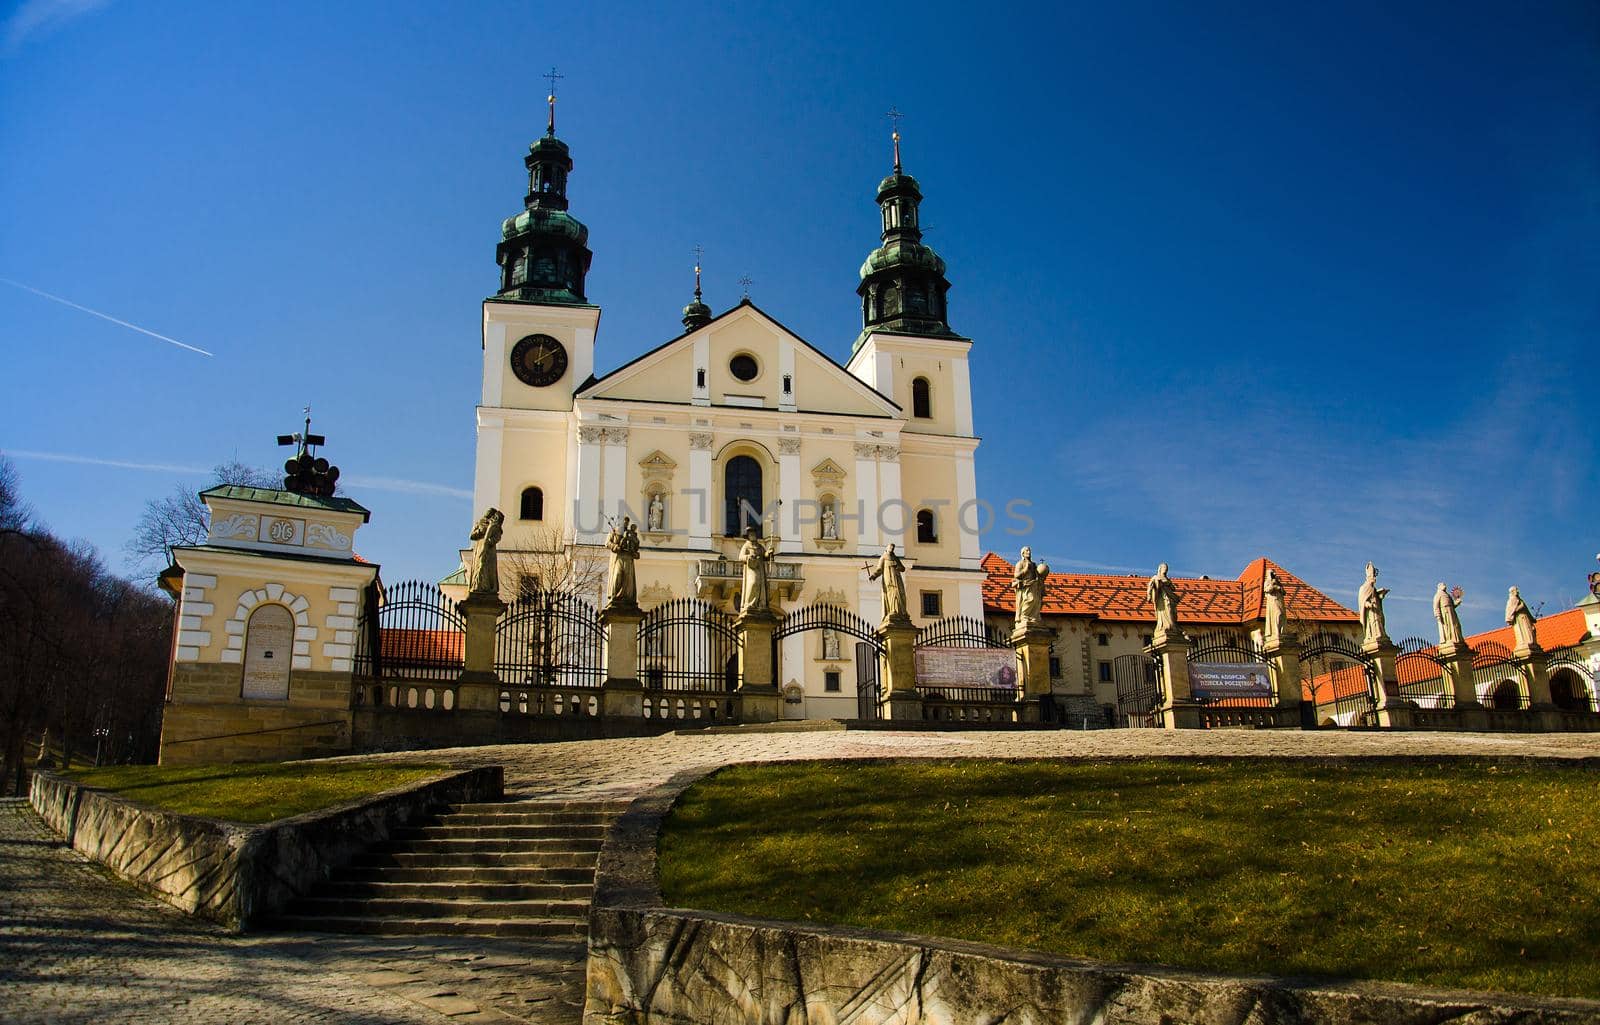 Sanctuary Monastery of Kalwaria Zebrzydowska UNESCO World Heritage Site near Krakow, Poland